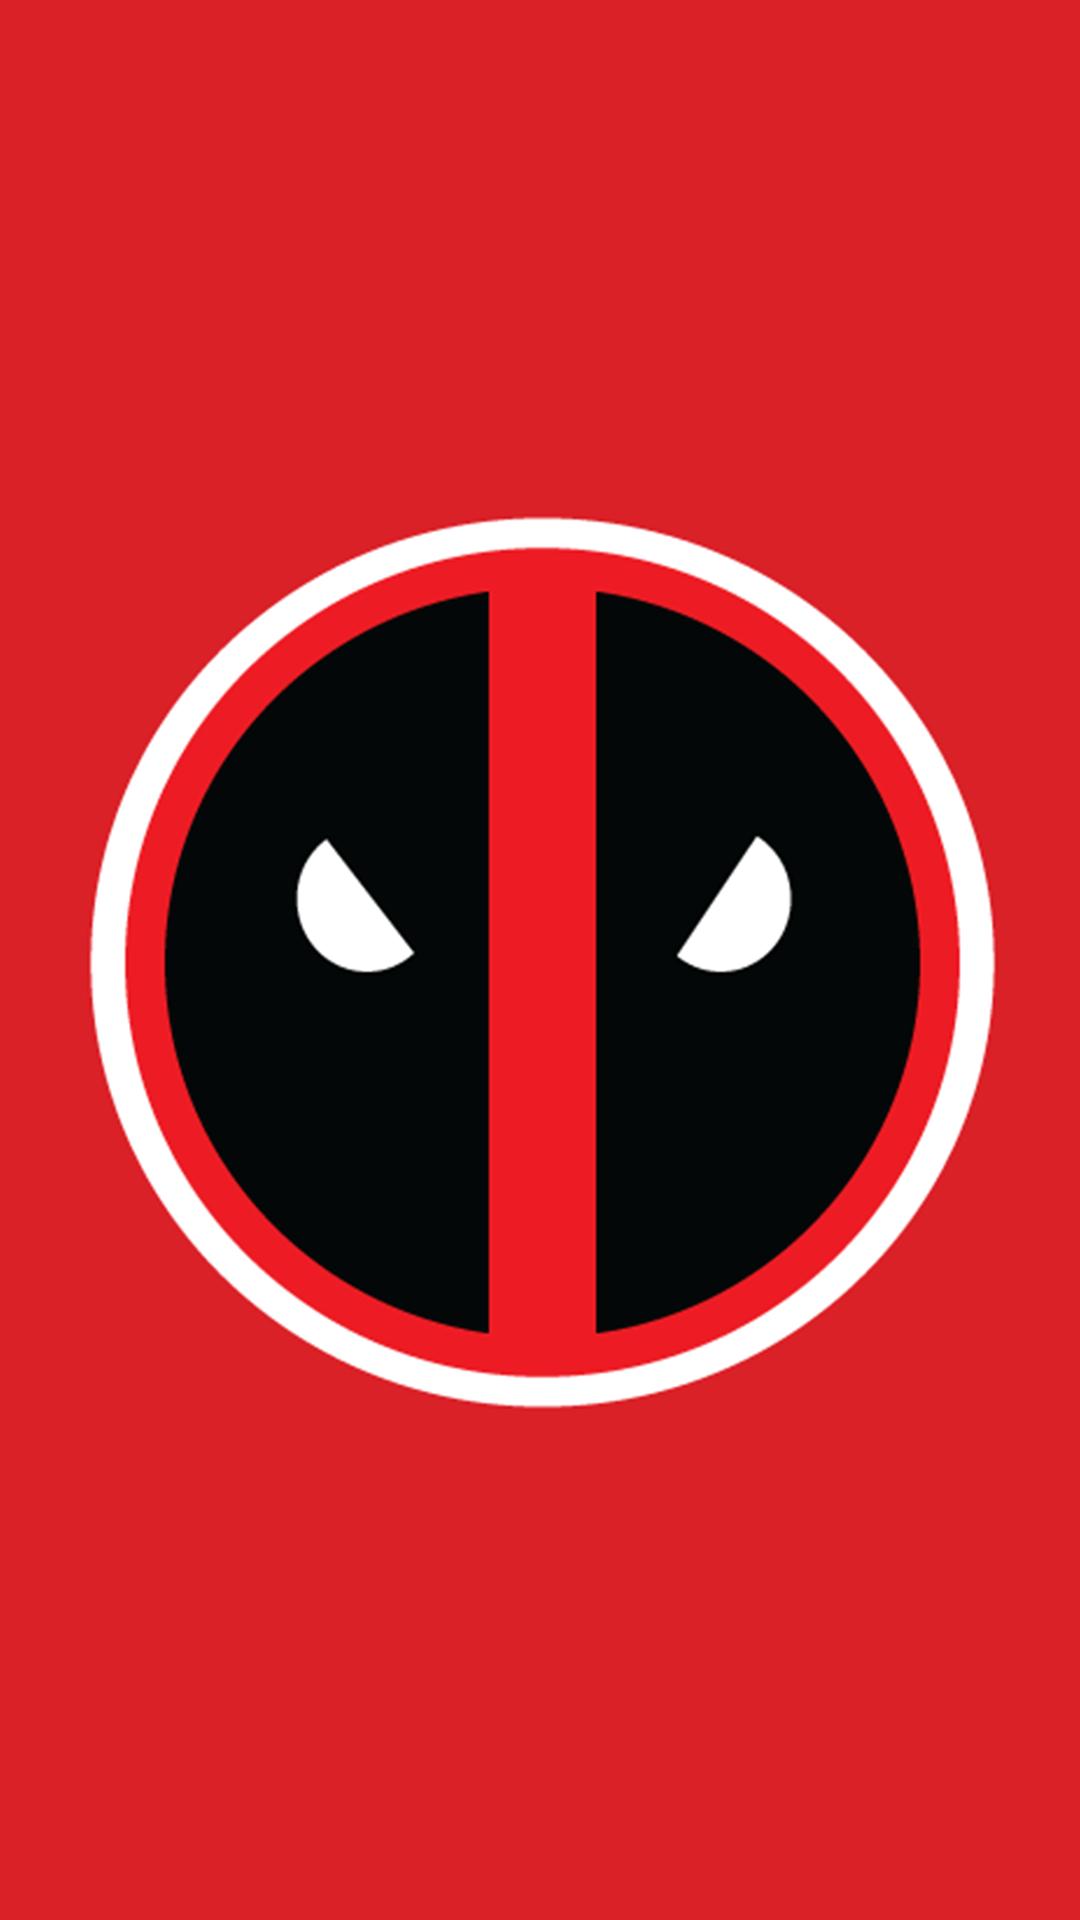 General 1080x1920 simple background antiheroes Deadpool minimalism comic art red background